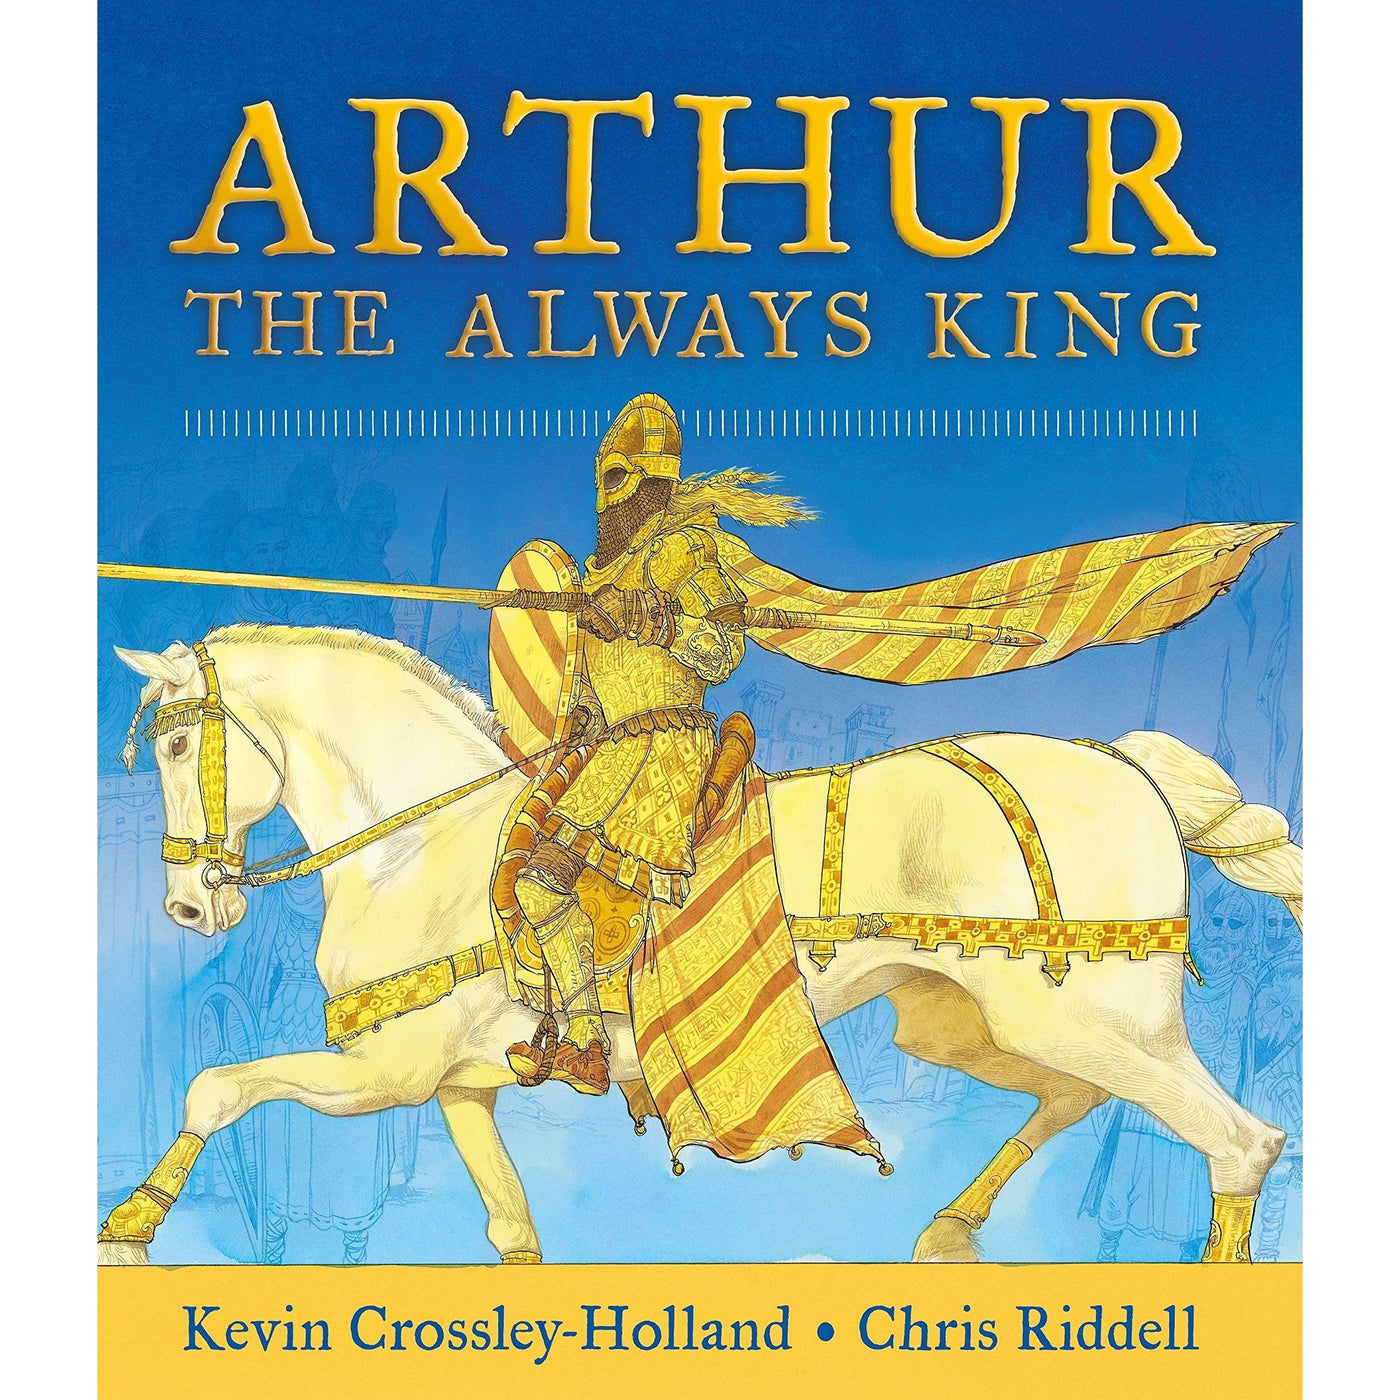 Arthur: The Always King - Kevin Crossley-Holland & Chris Riddell